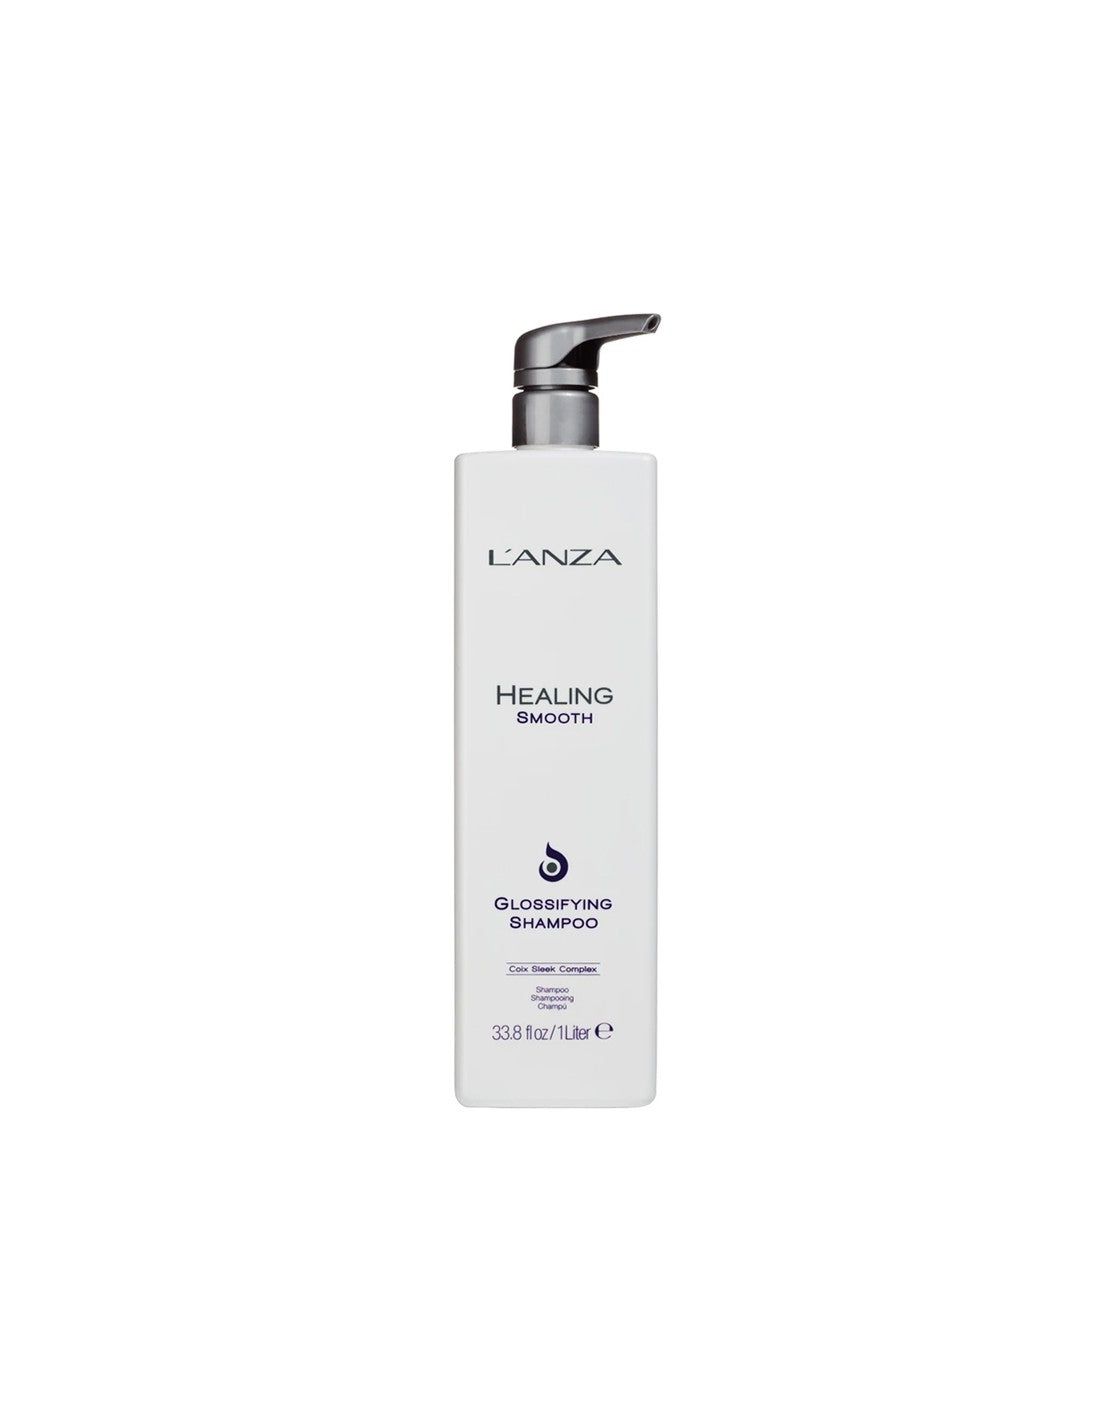 L'ANZA Healing Smooth Glossifying Shampoo